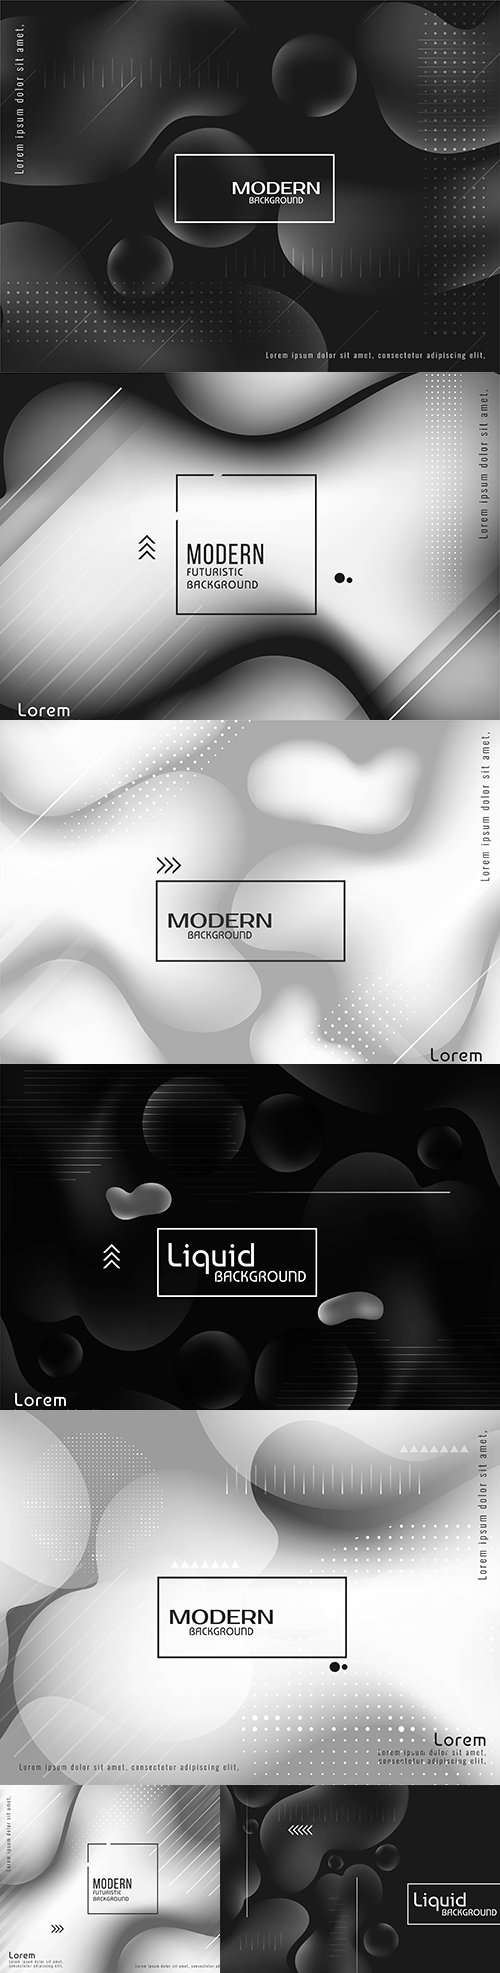 Modern elegant grey and black color liquid background